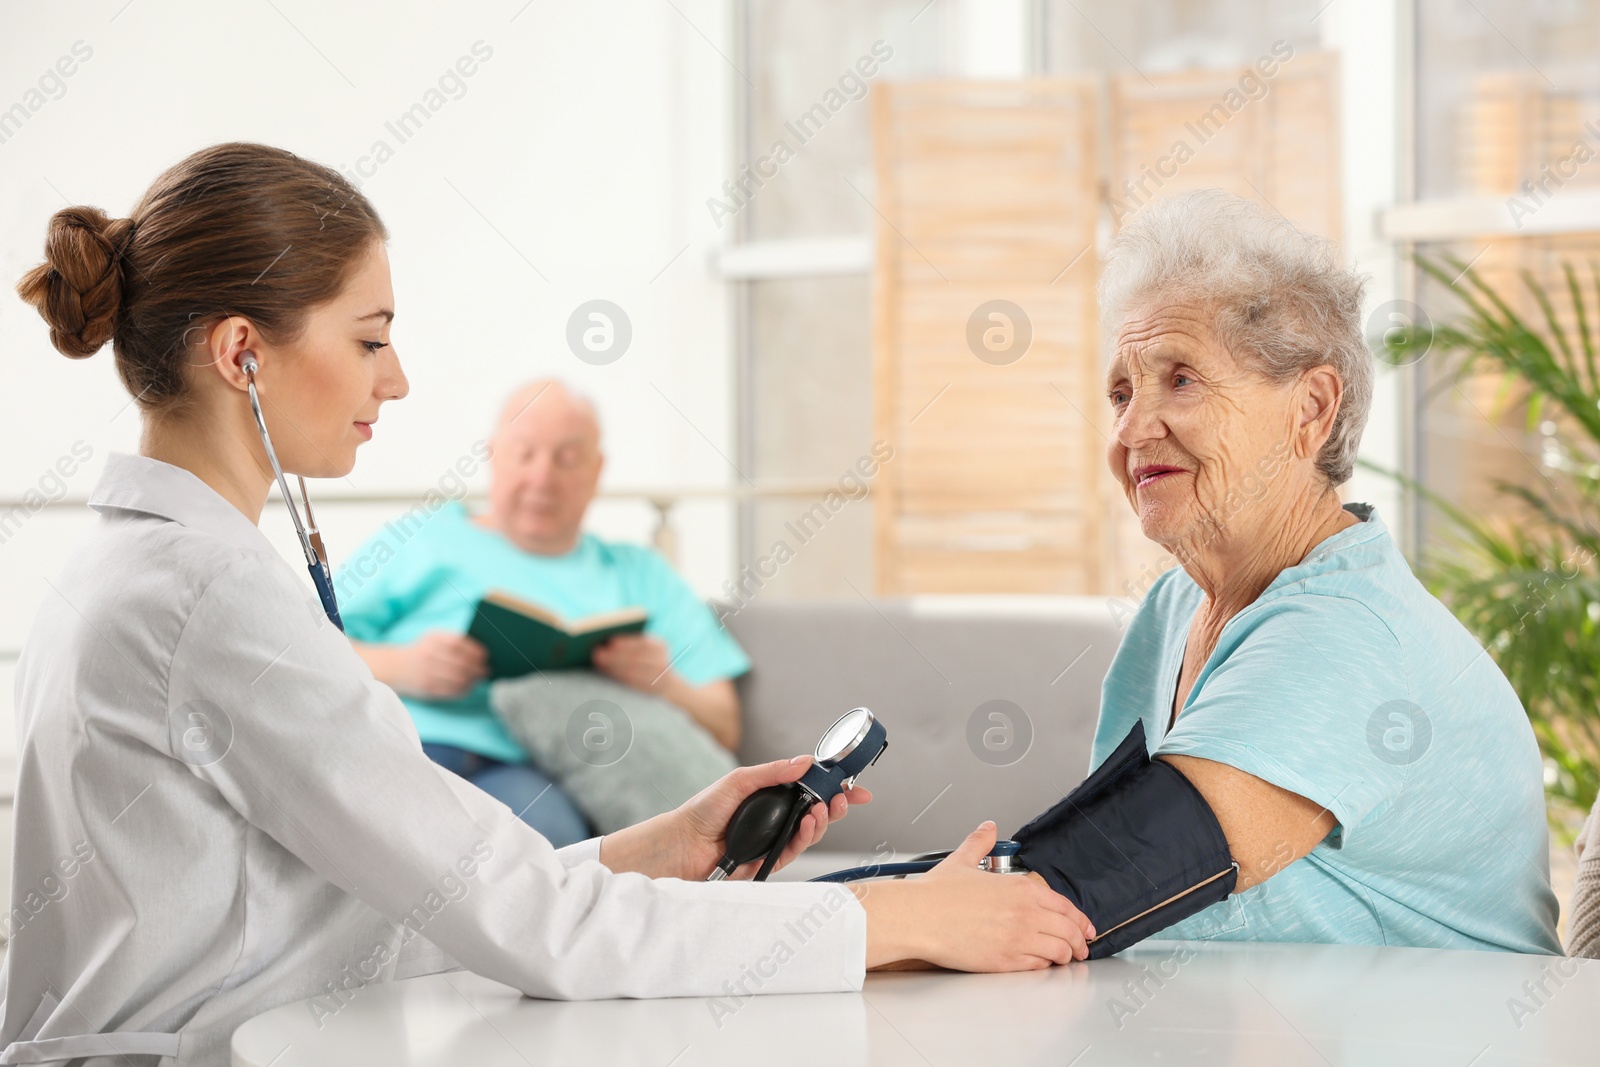 Photo of Nurse measuring blood pressure of elderly woman indoors. Assisting senior generation